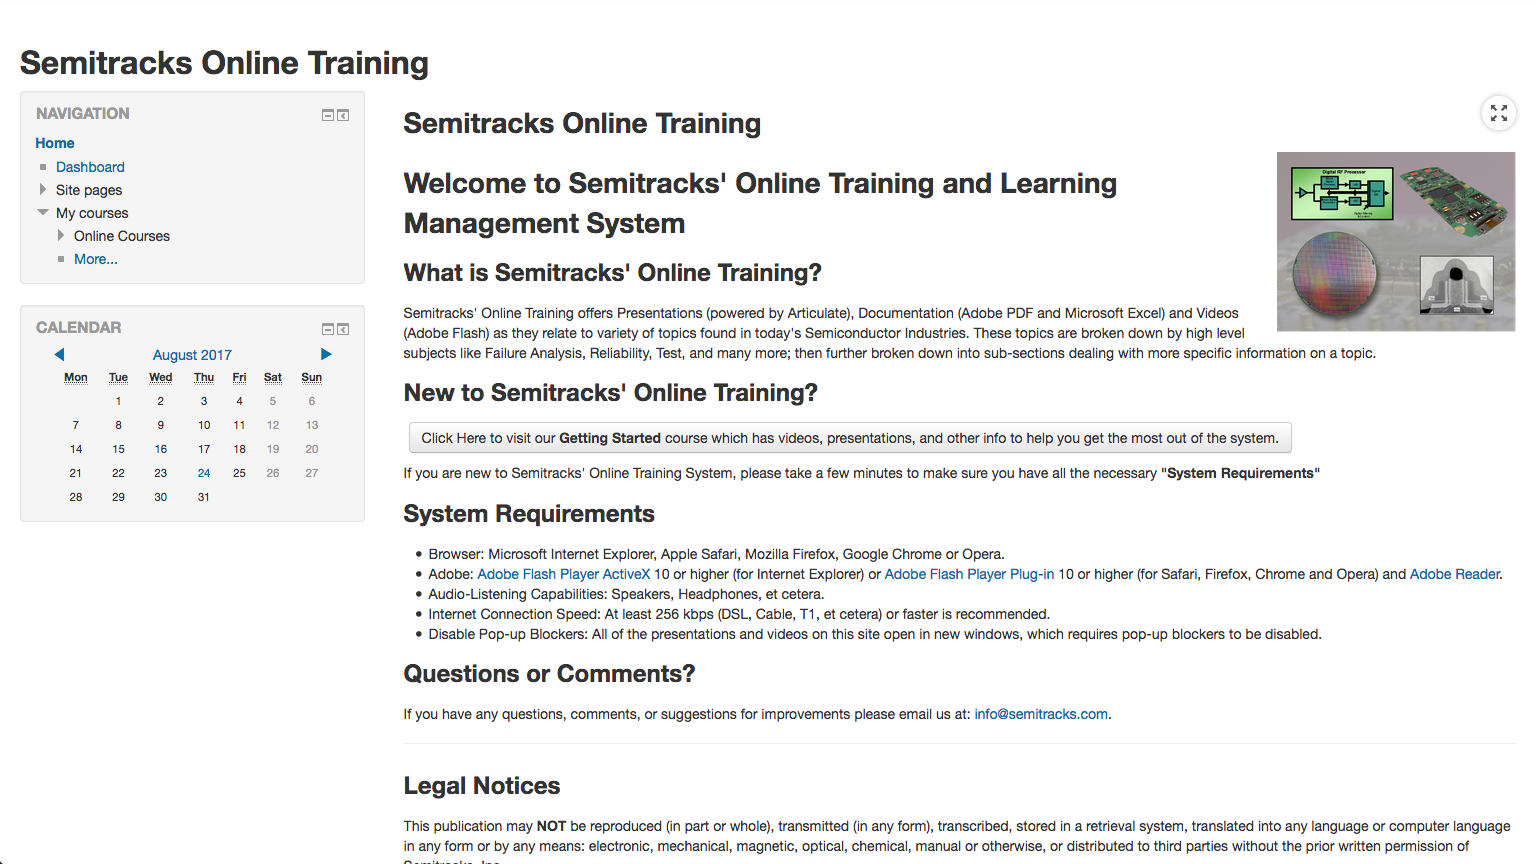 Online Training Overview Screenshot